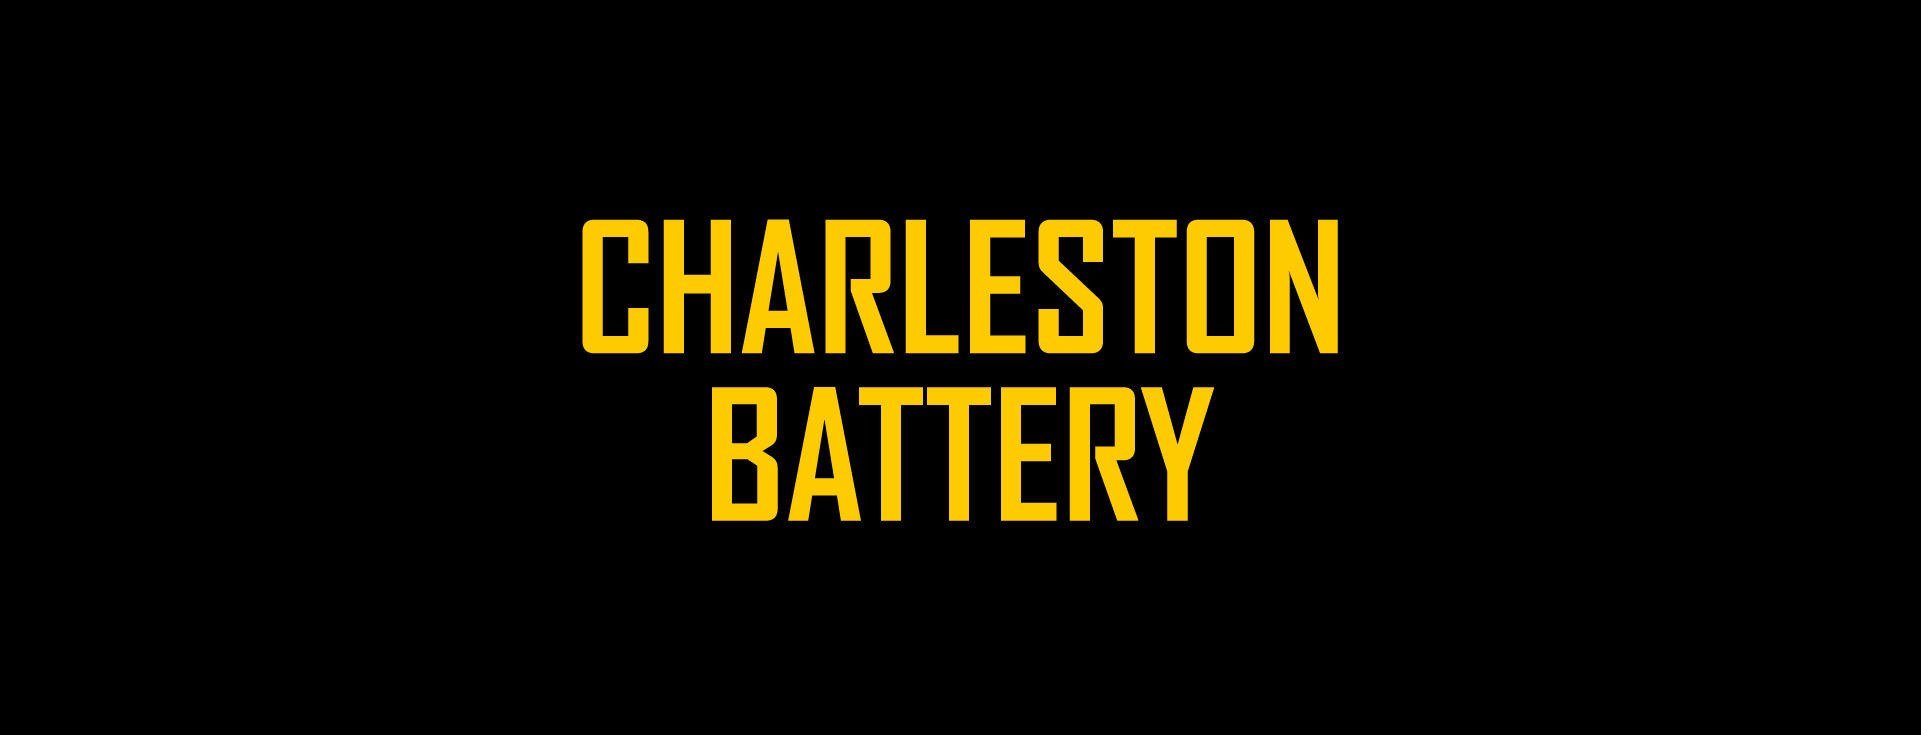 CharlestonBattery_MatthewWolff_Wordmark_2